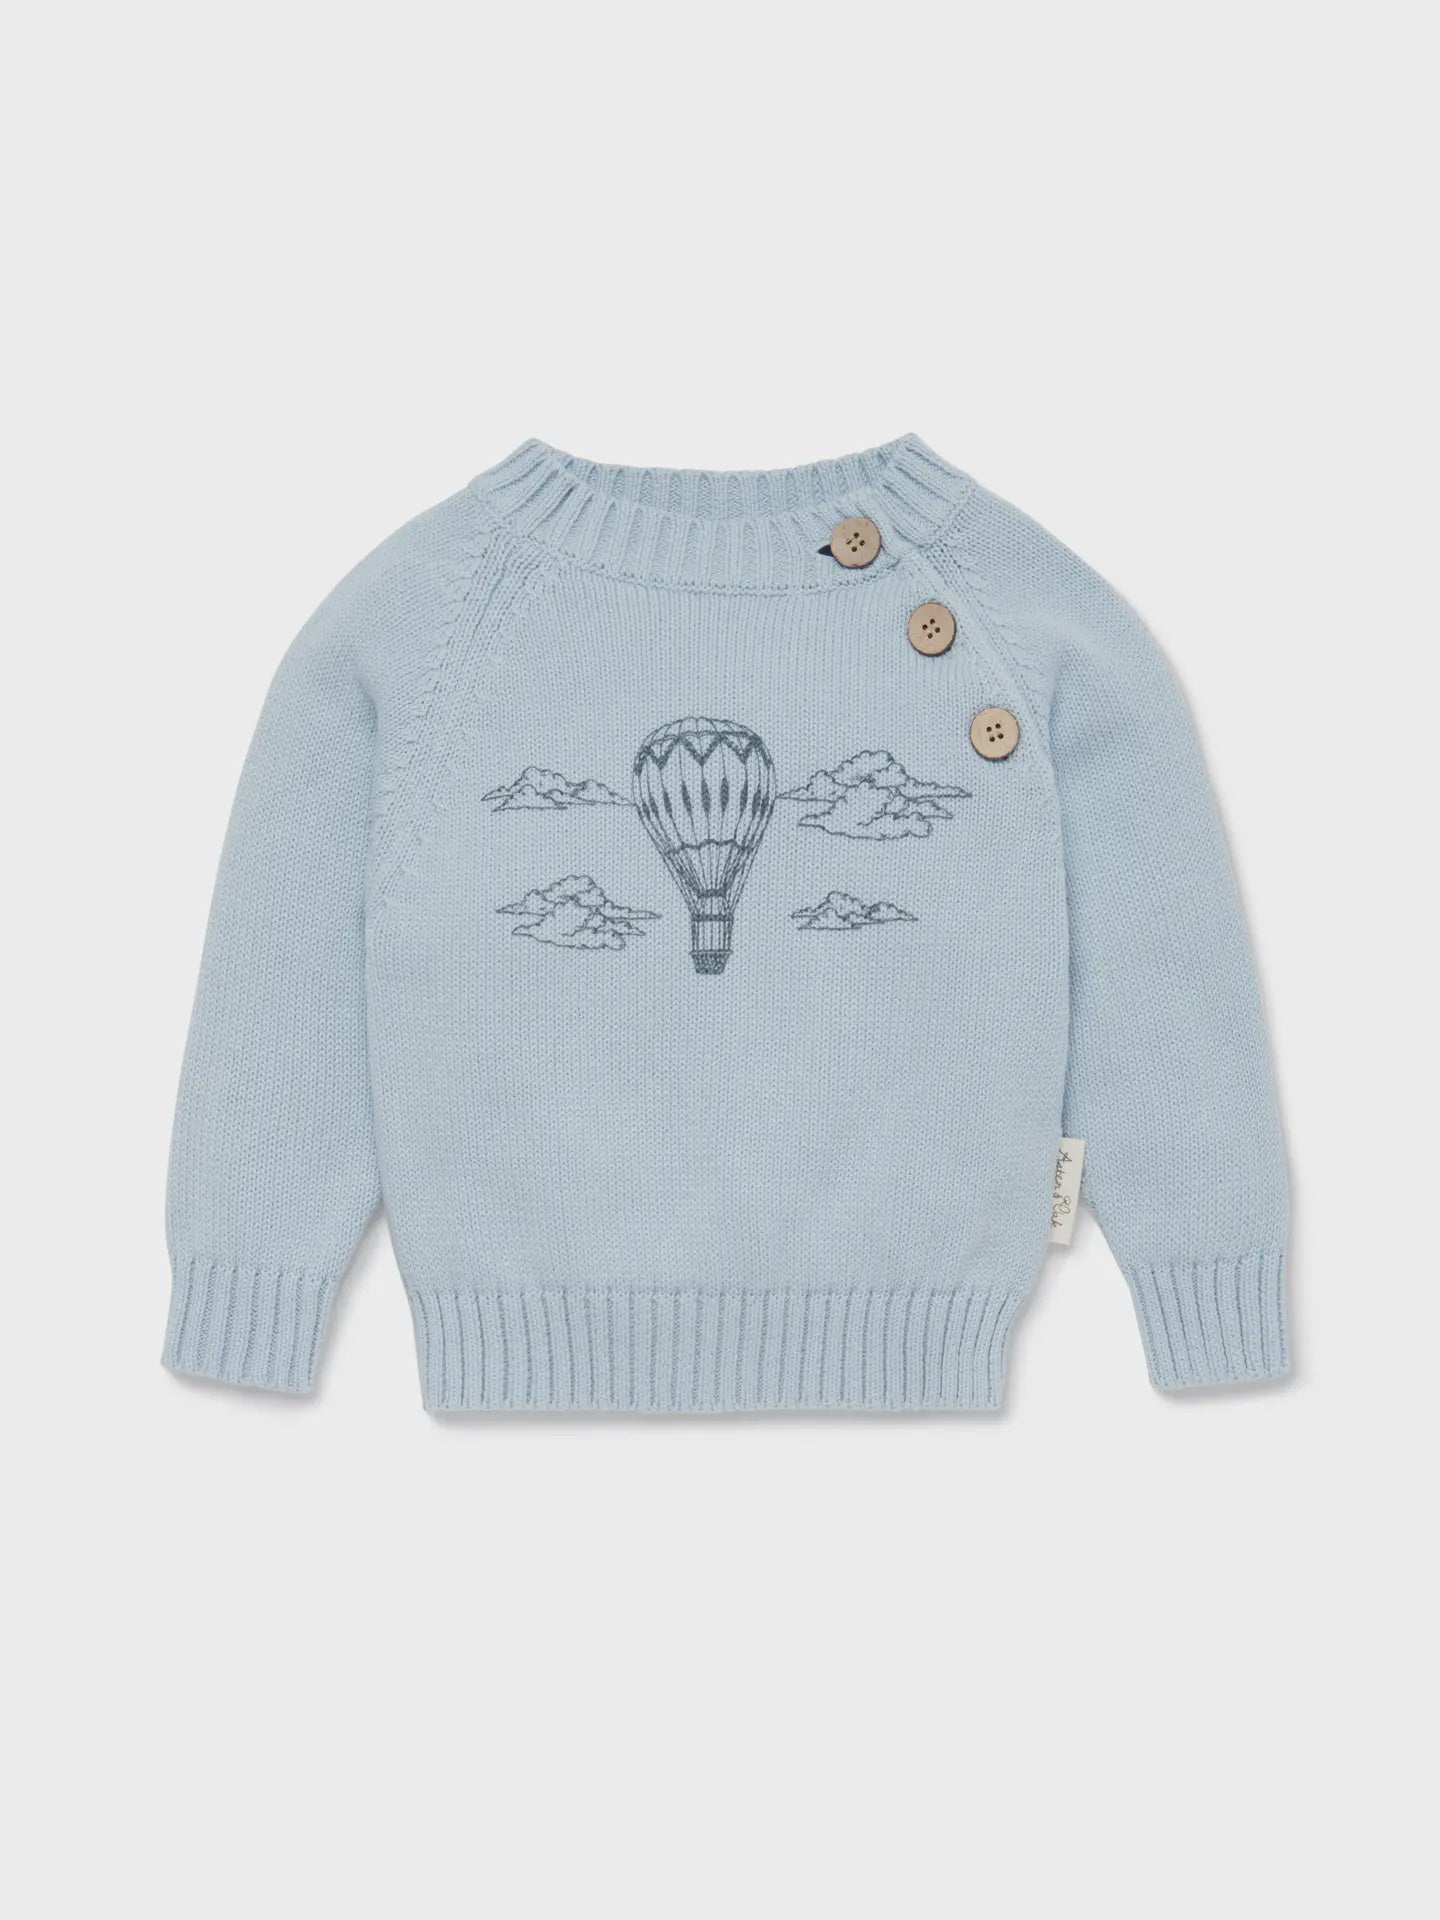 Aster & Oak Air Balloon Knit Sweater, 1 yr